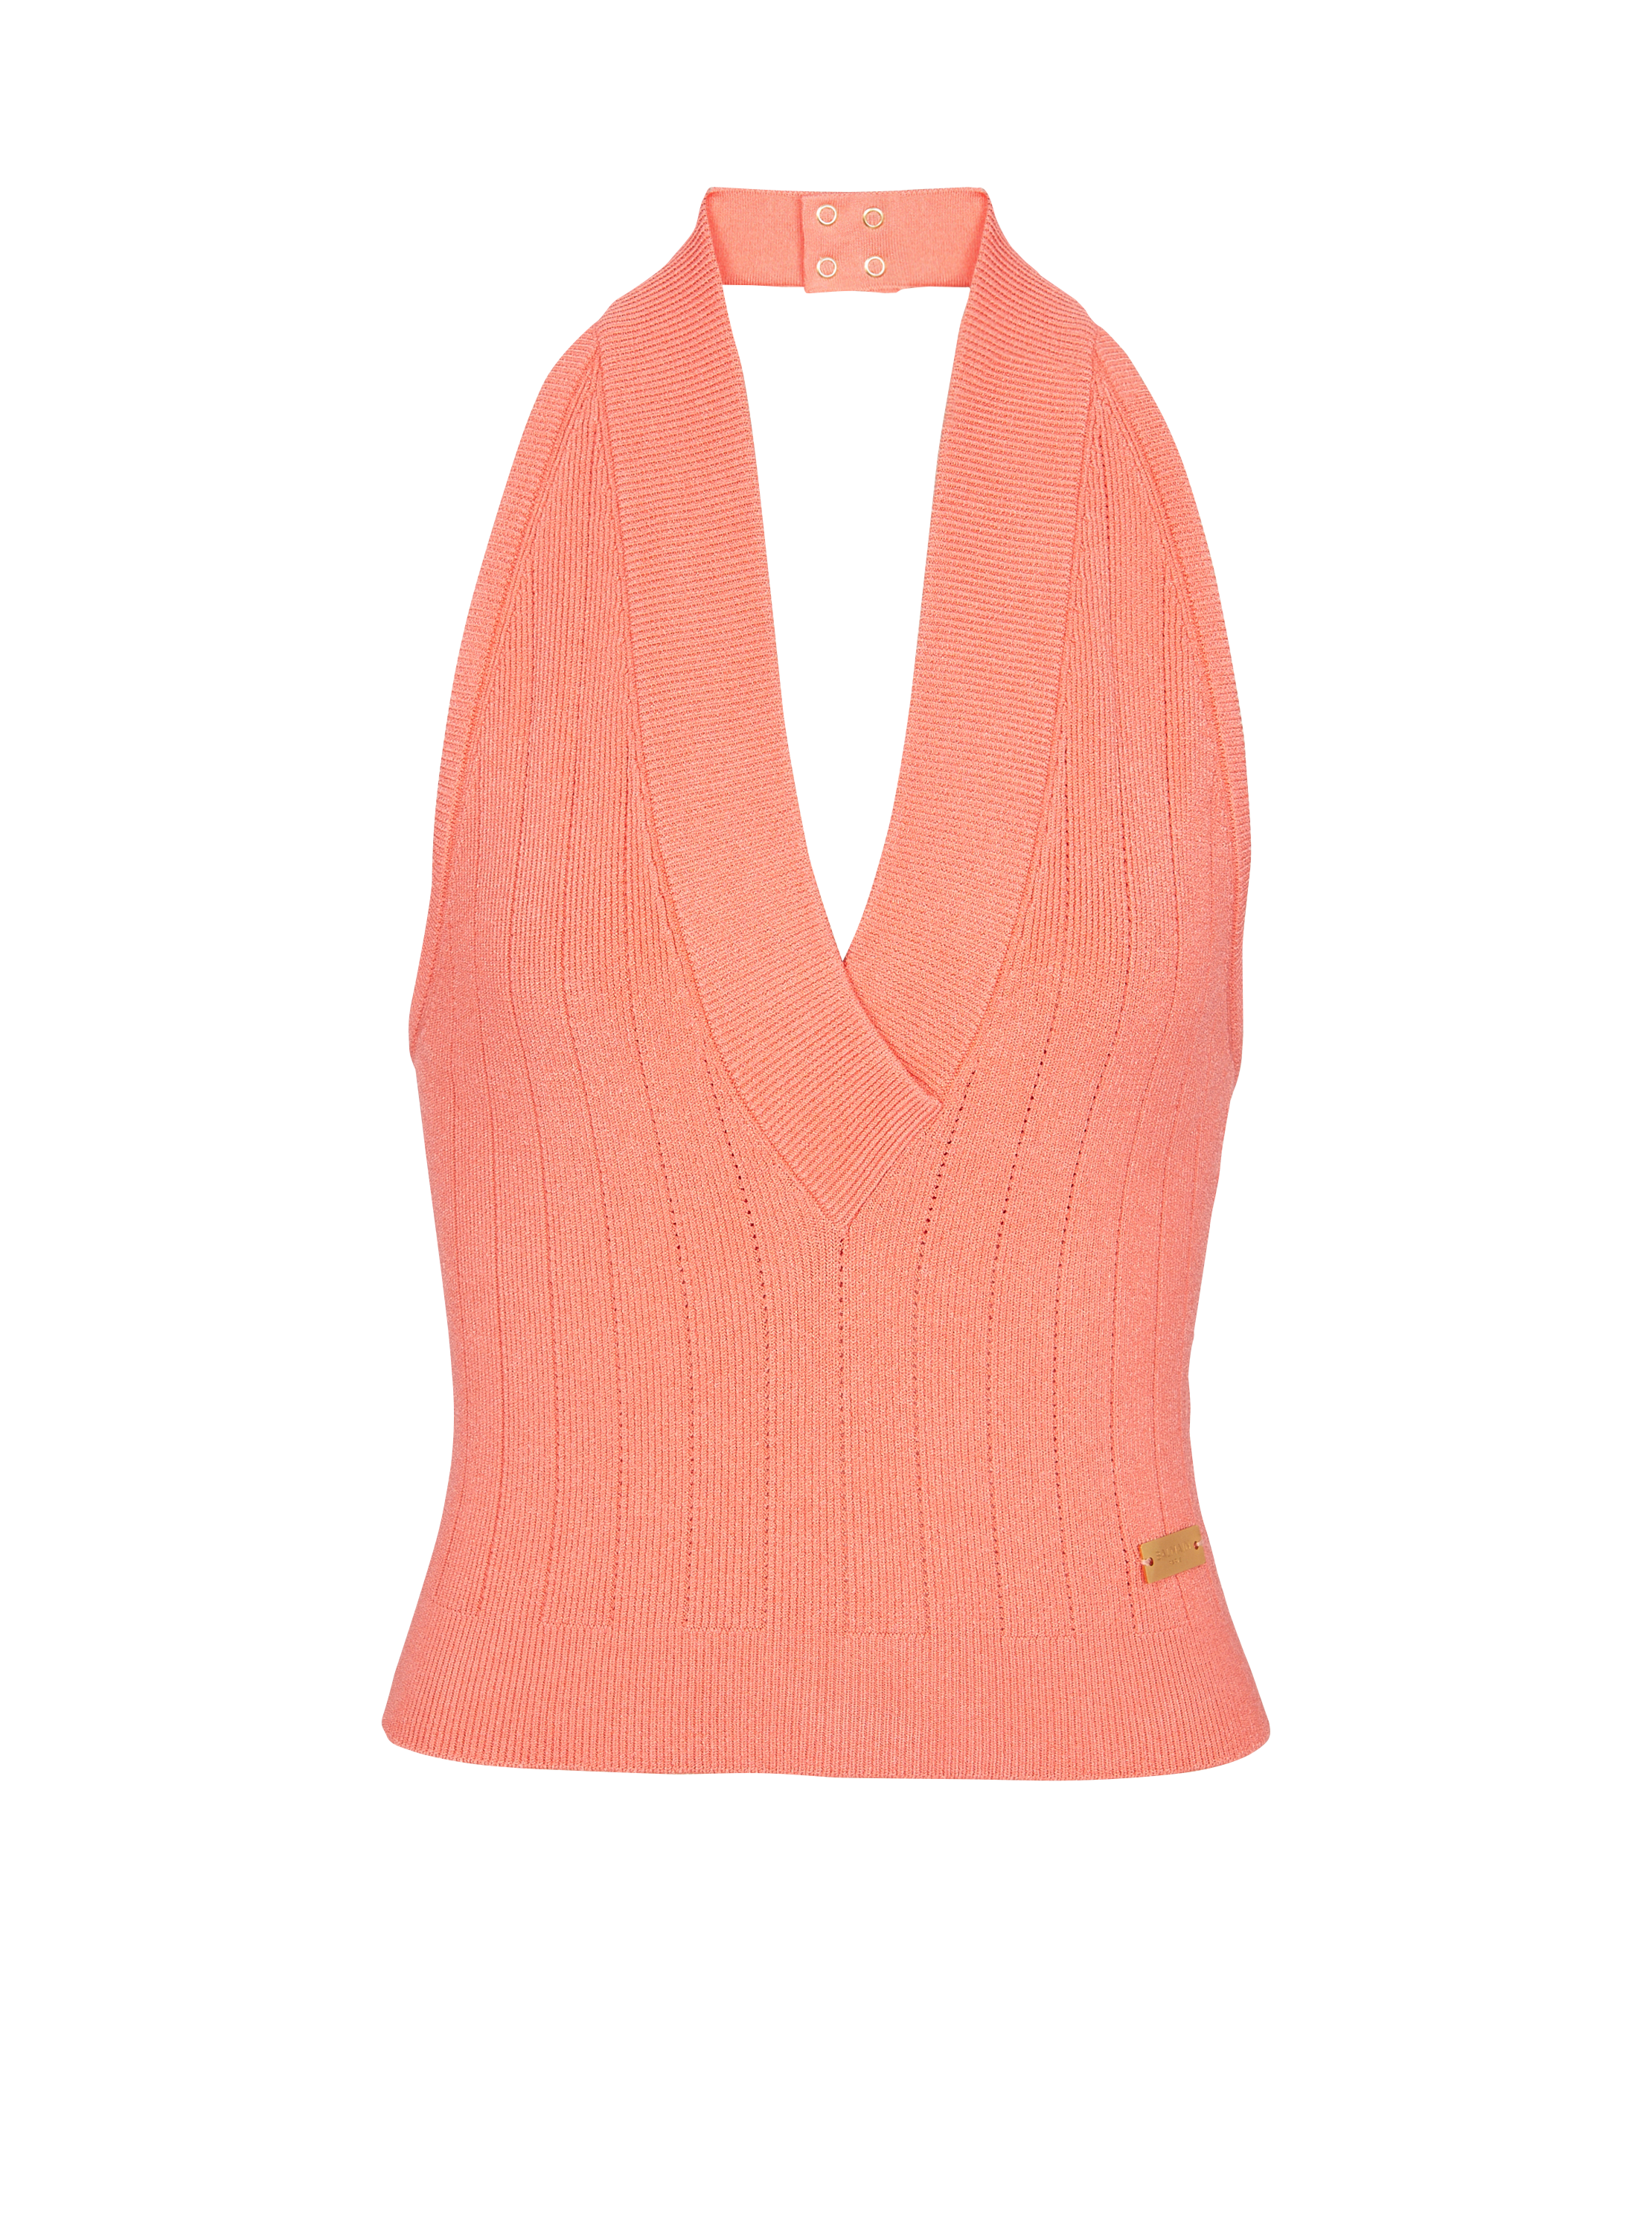 Knit backless top, pink, hi-res